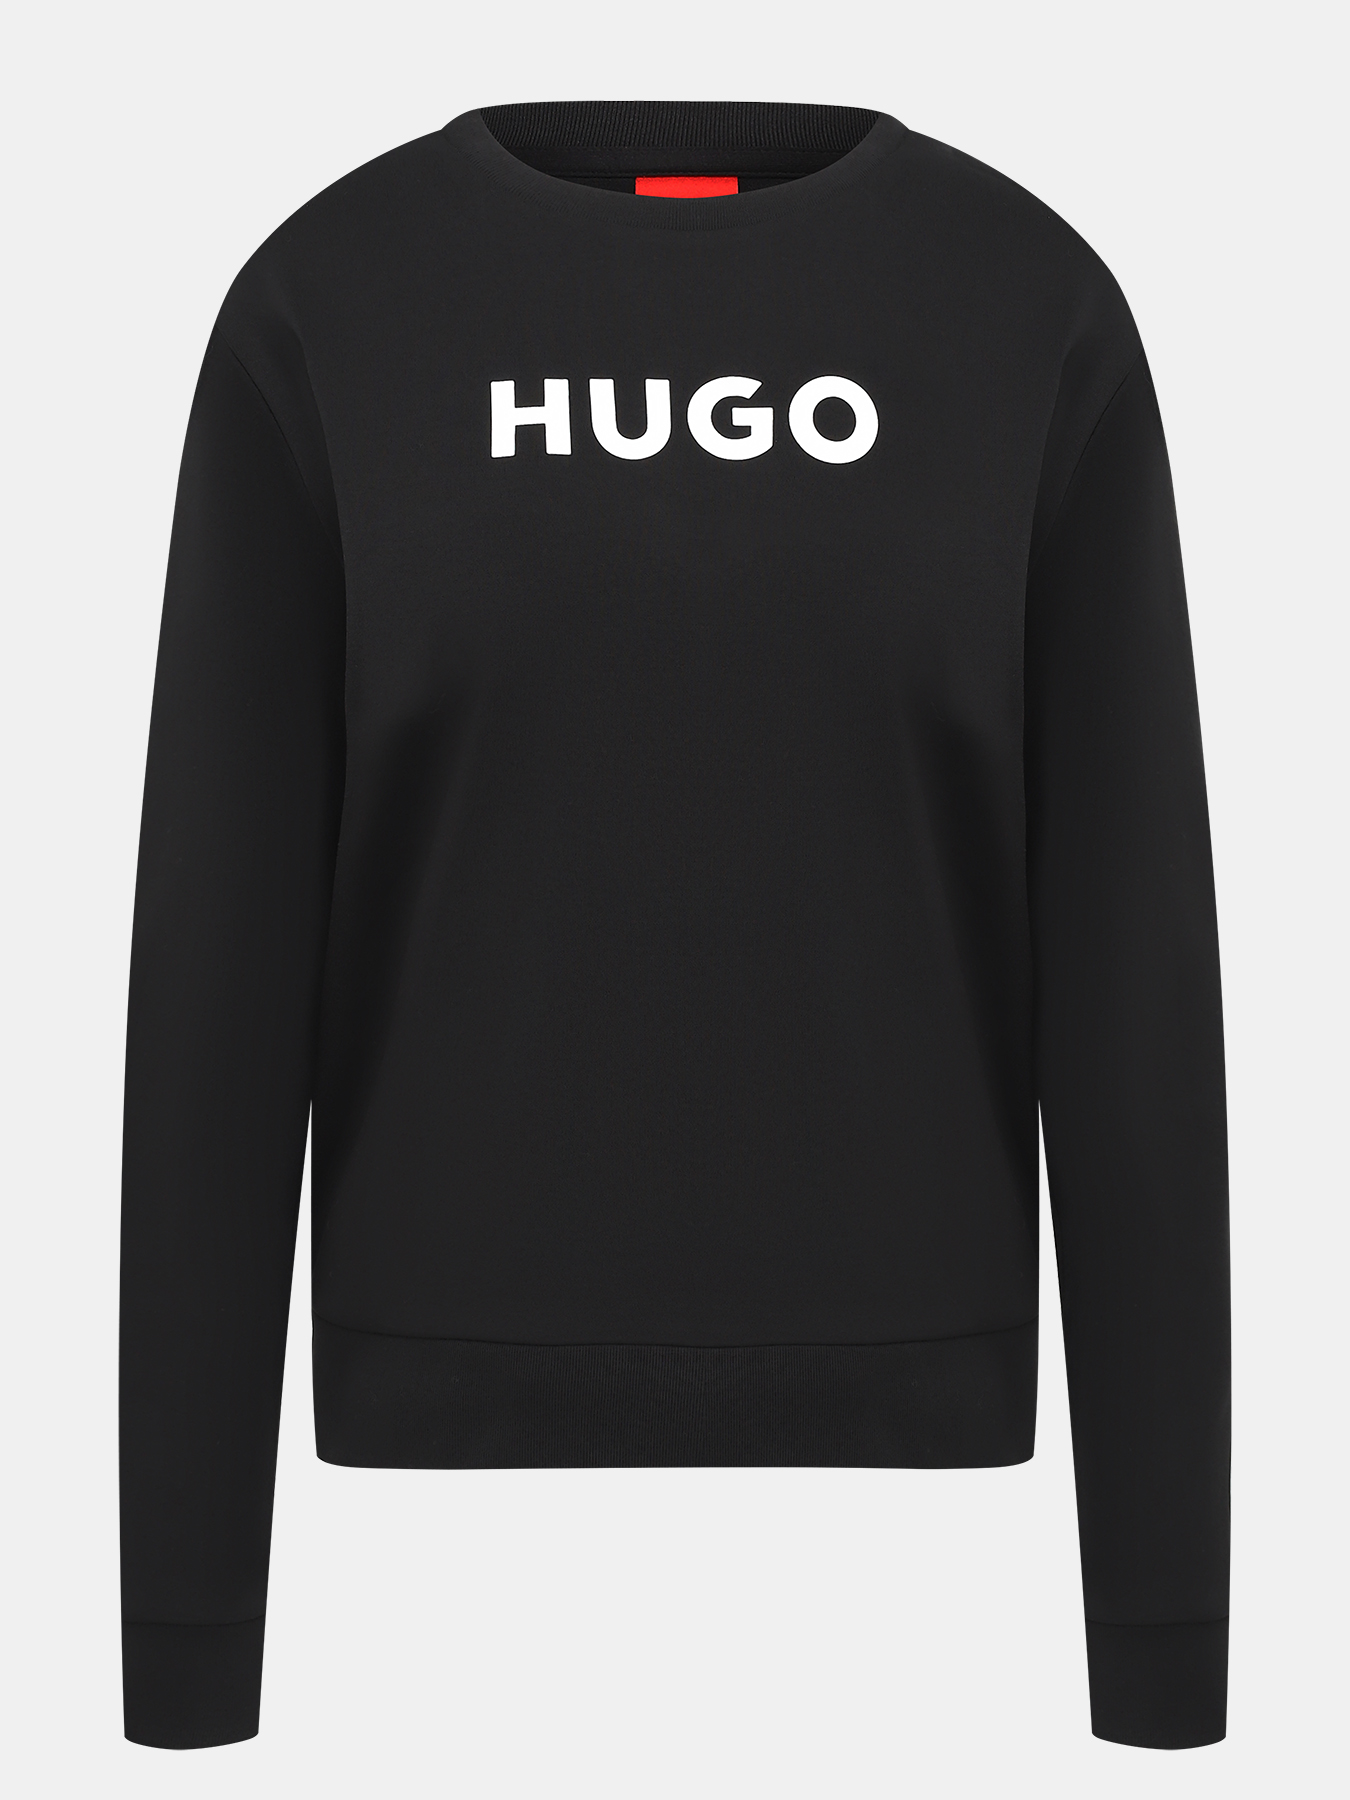 Свитшот The Hugo HUGO 429386-042